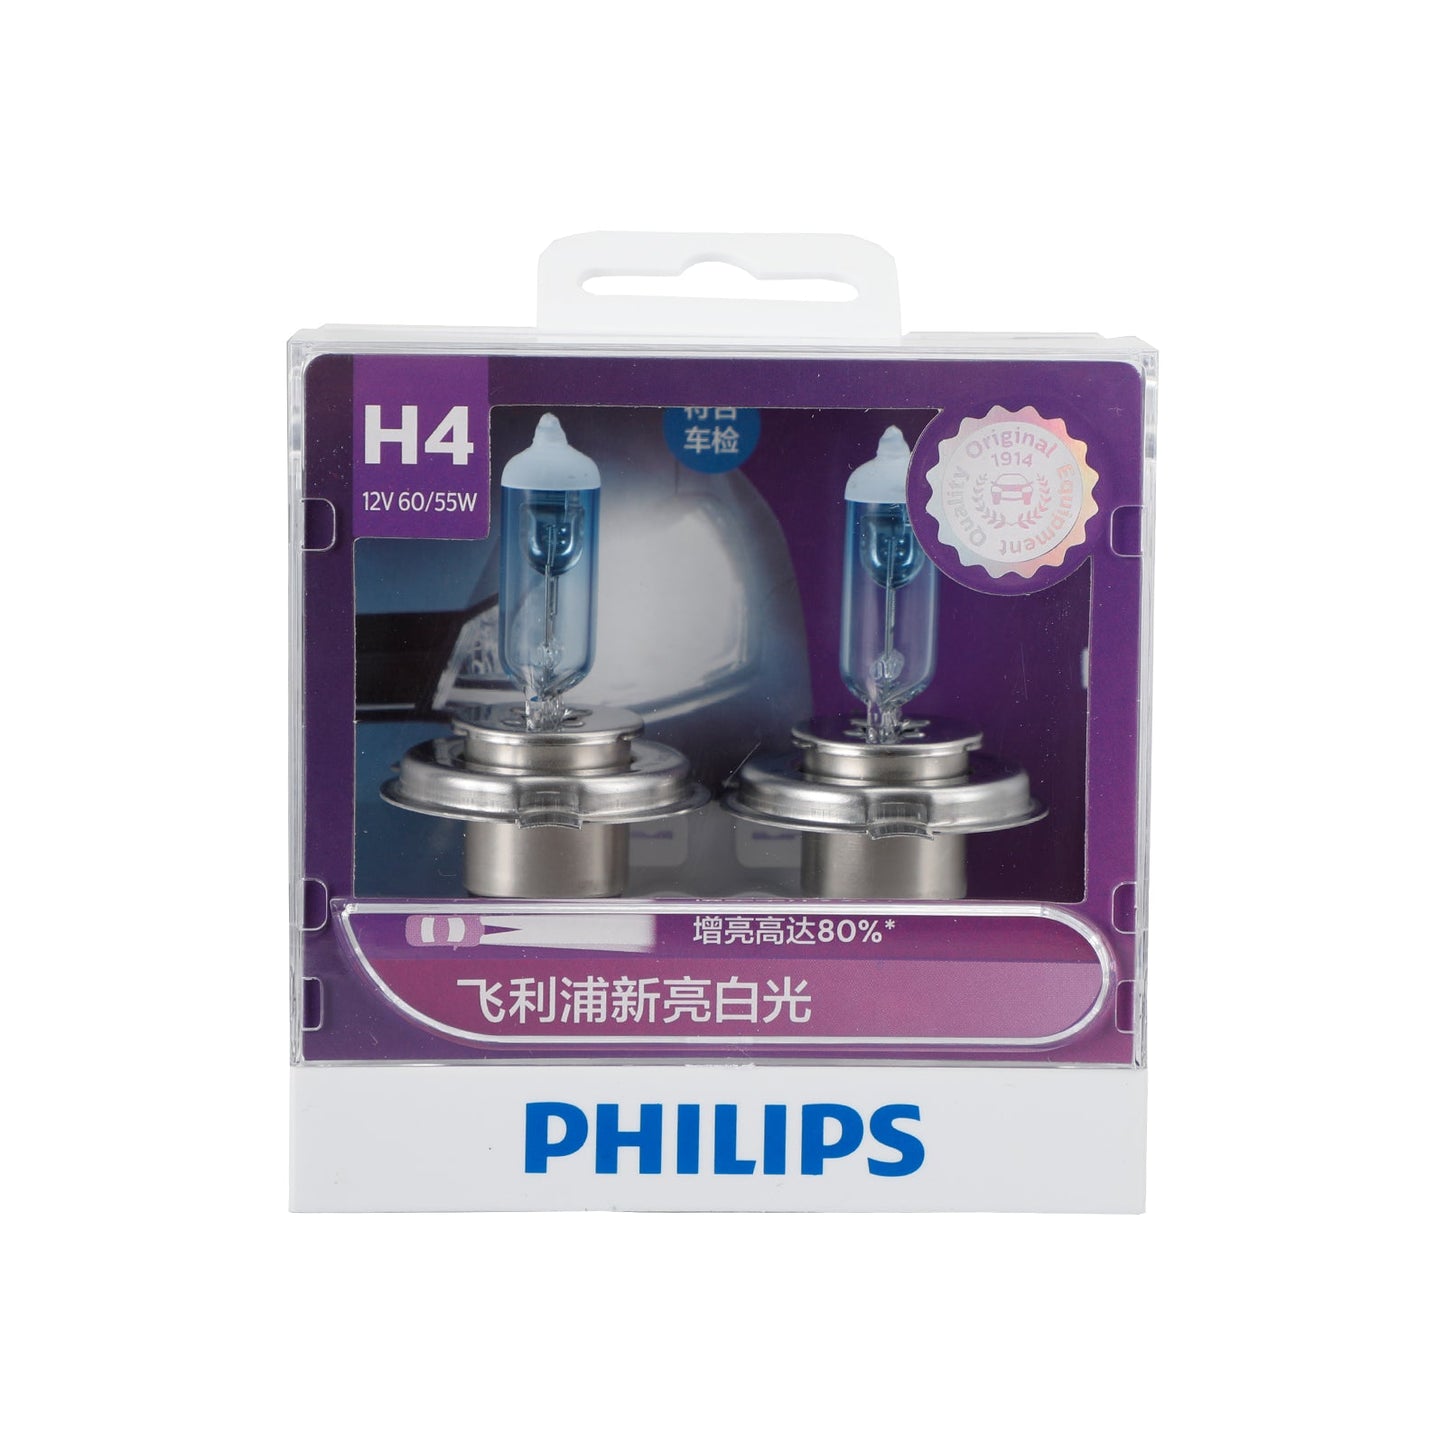 For Philips 12342VBS2 H4 New Bright White Light Headlight Halogen 12V 60W/55W